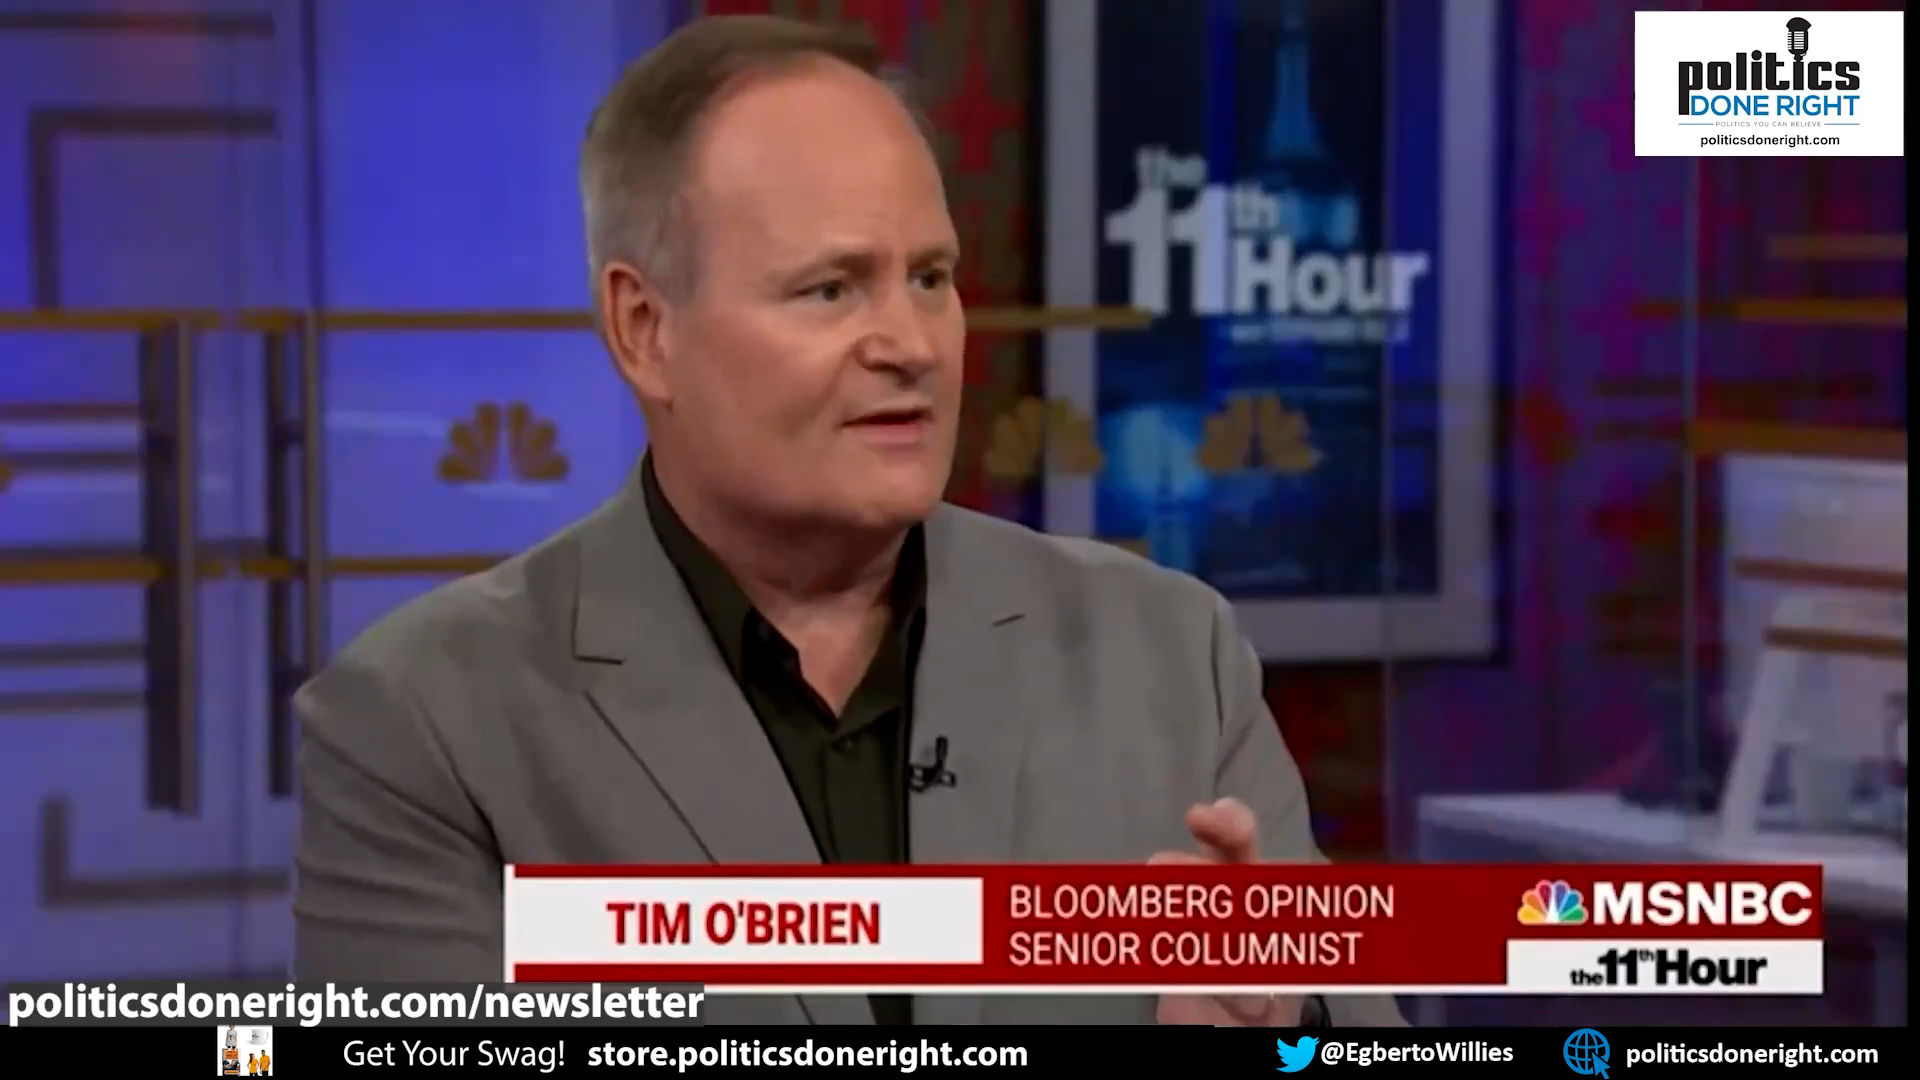 Bloomberg Opinion Senior Columnist Tim O'Brien: Loser